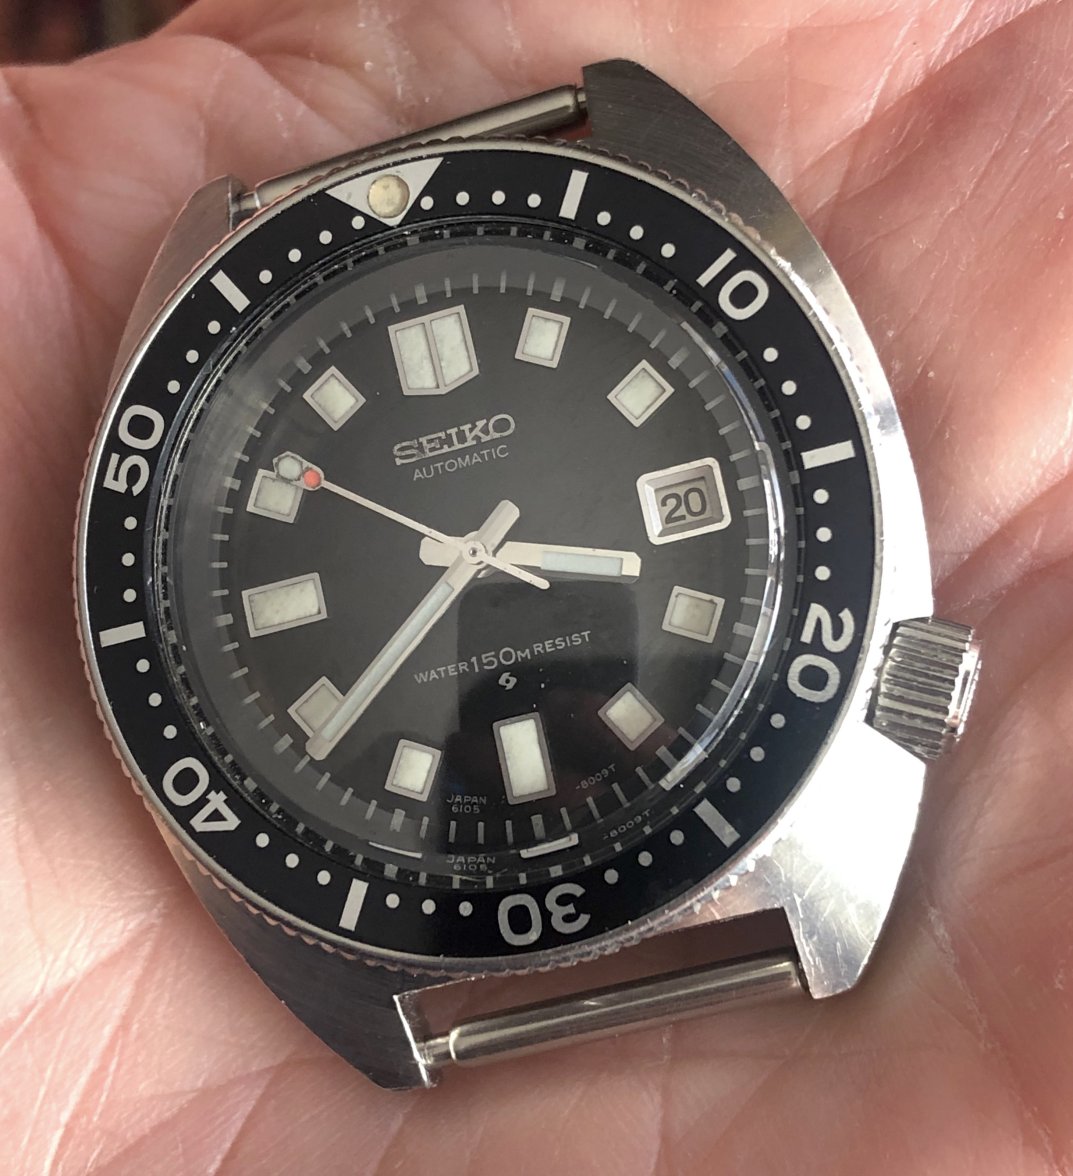 SOLD - Vintage Seiko 6105-8000 diver - totally restored | Omega Forums